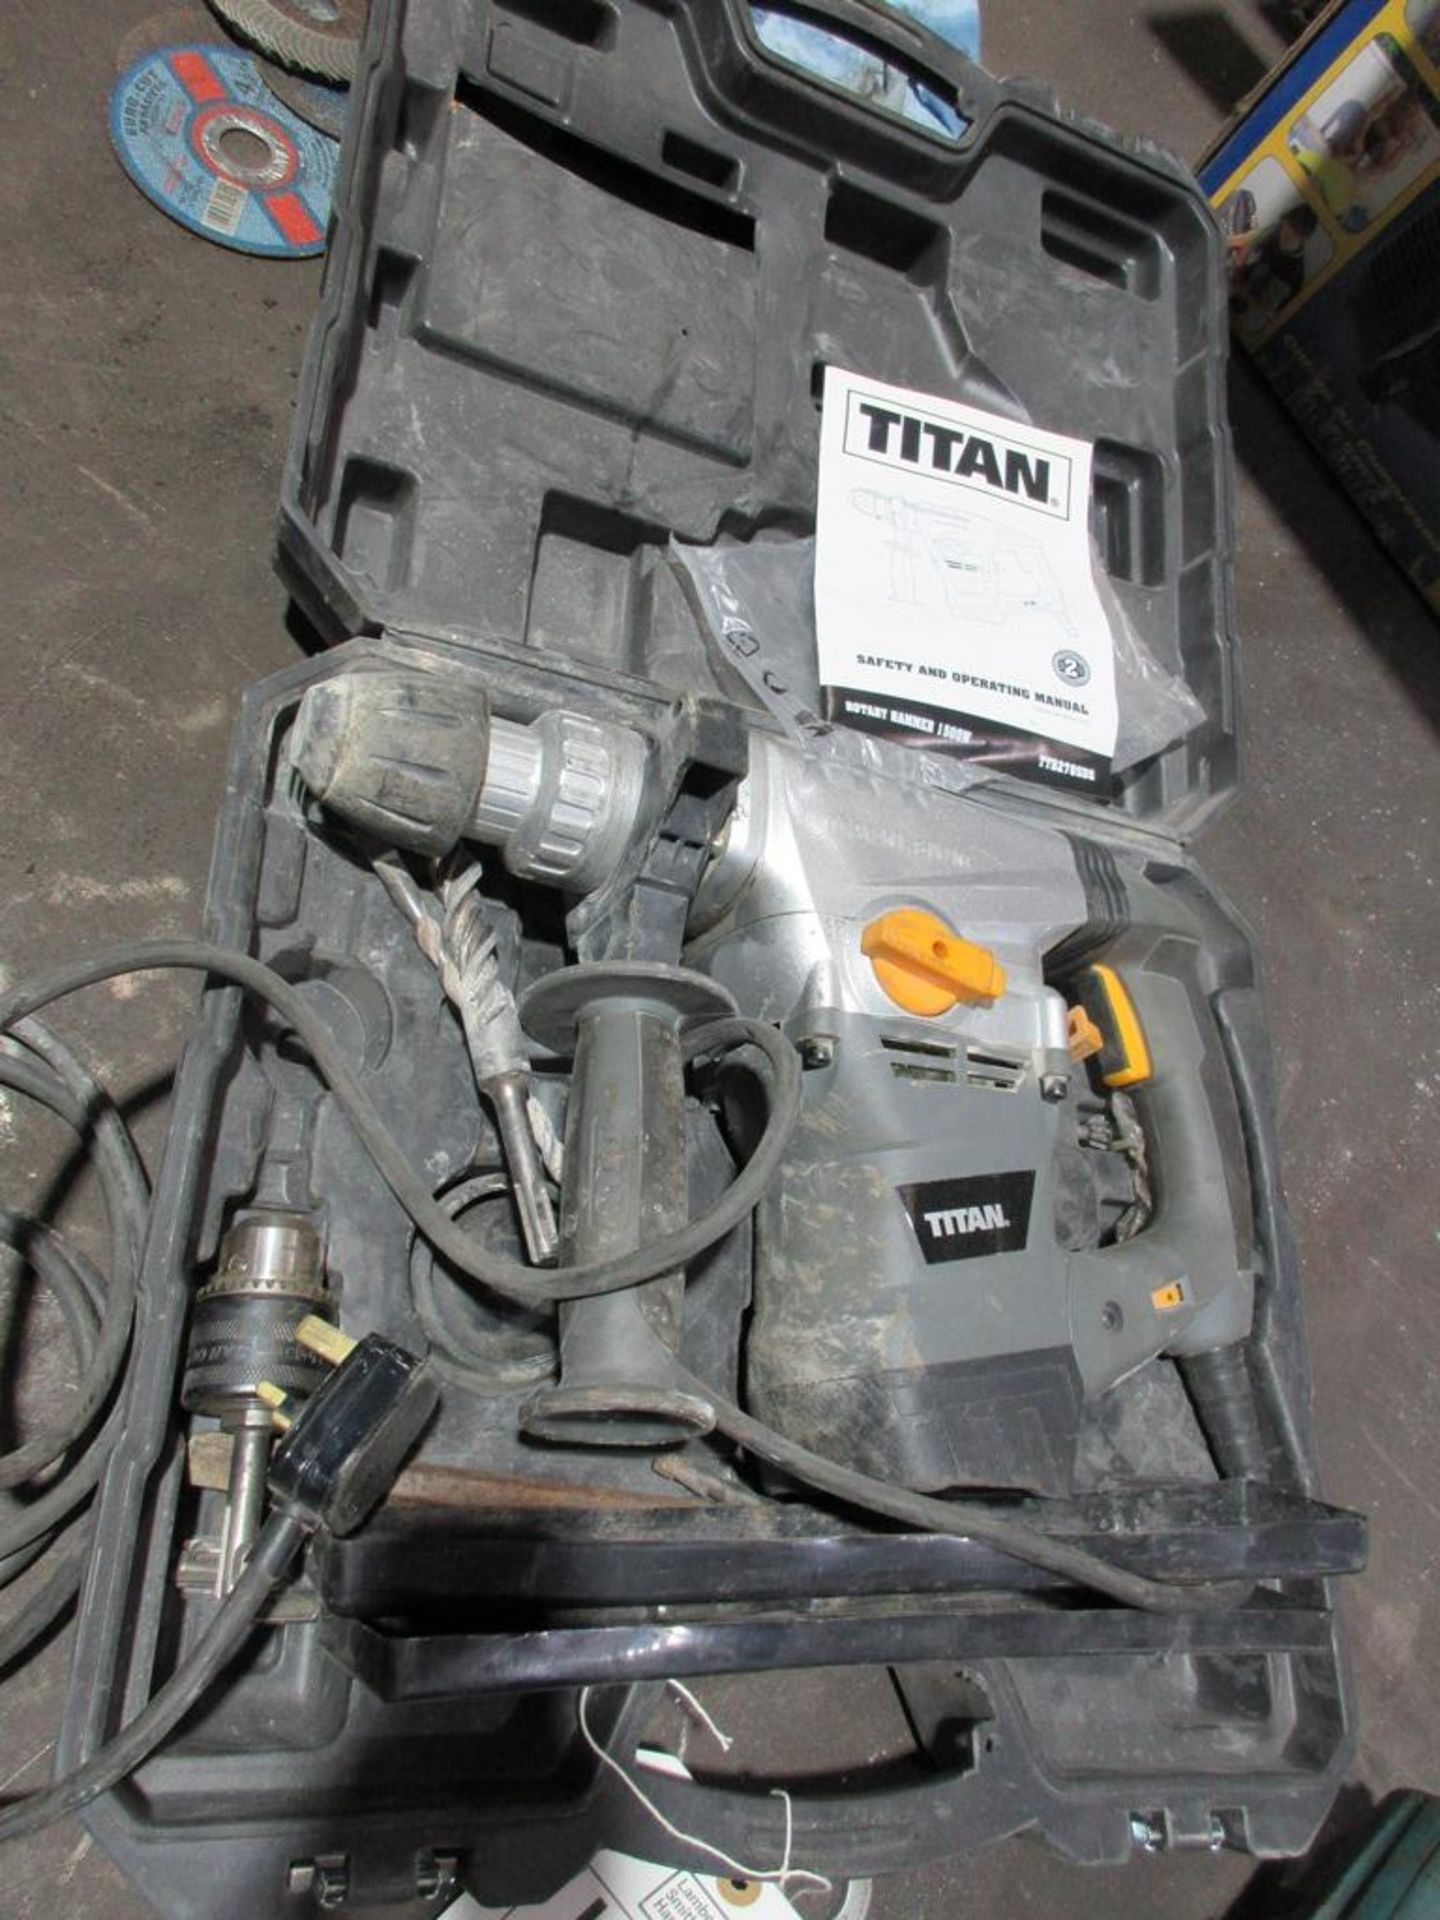 Titan TTB278SDS, 1500W rotary hammer drill - Image 2 of 3